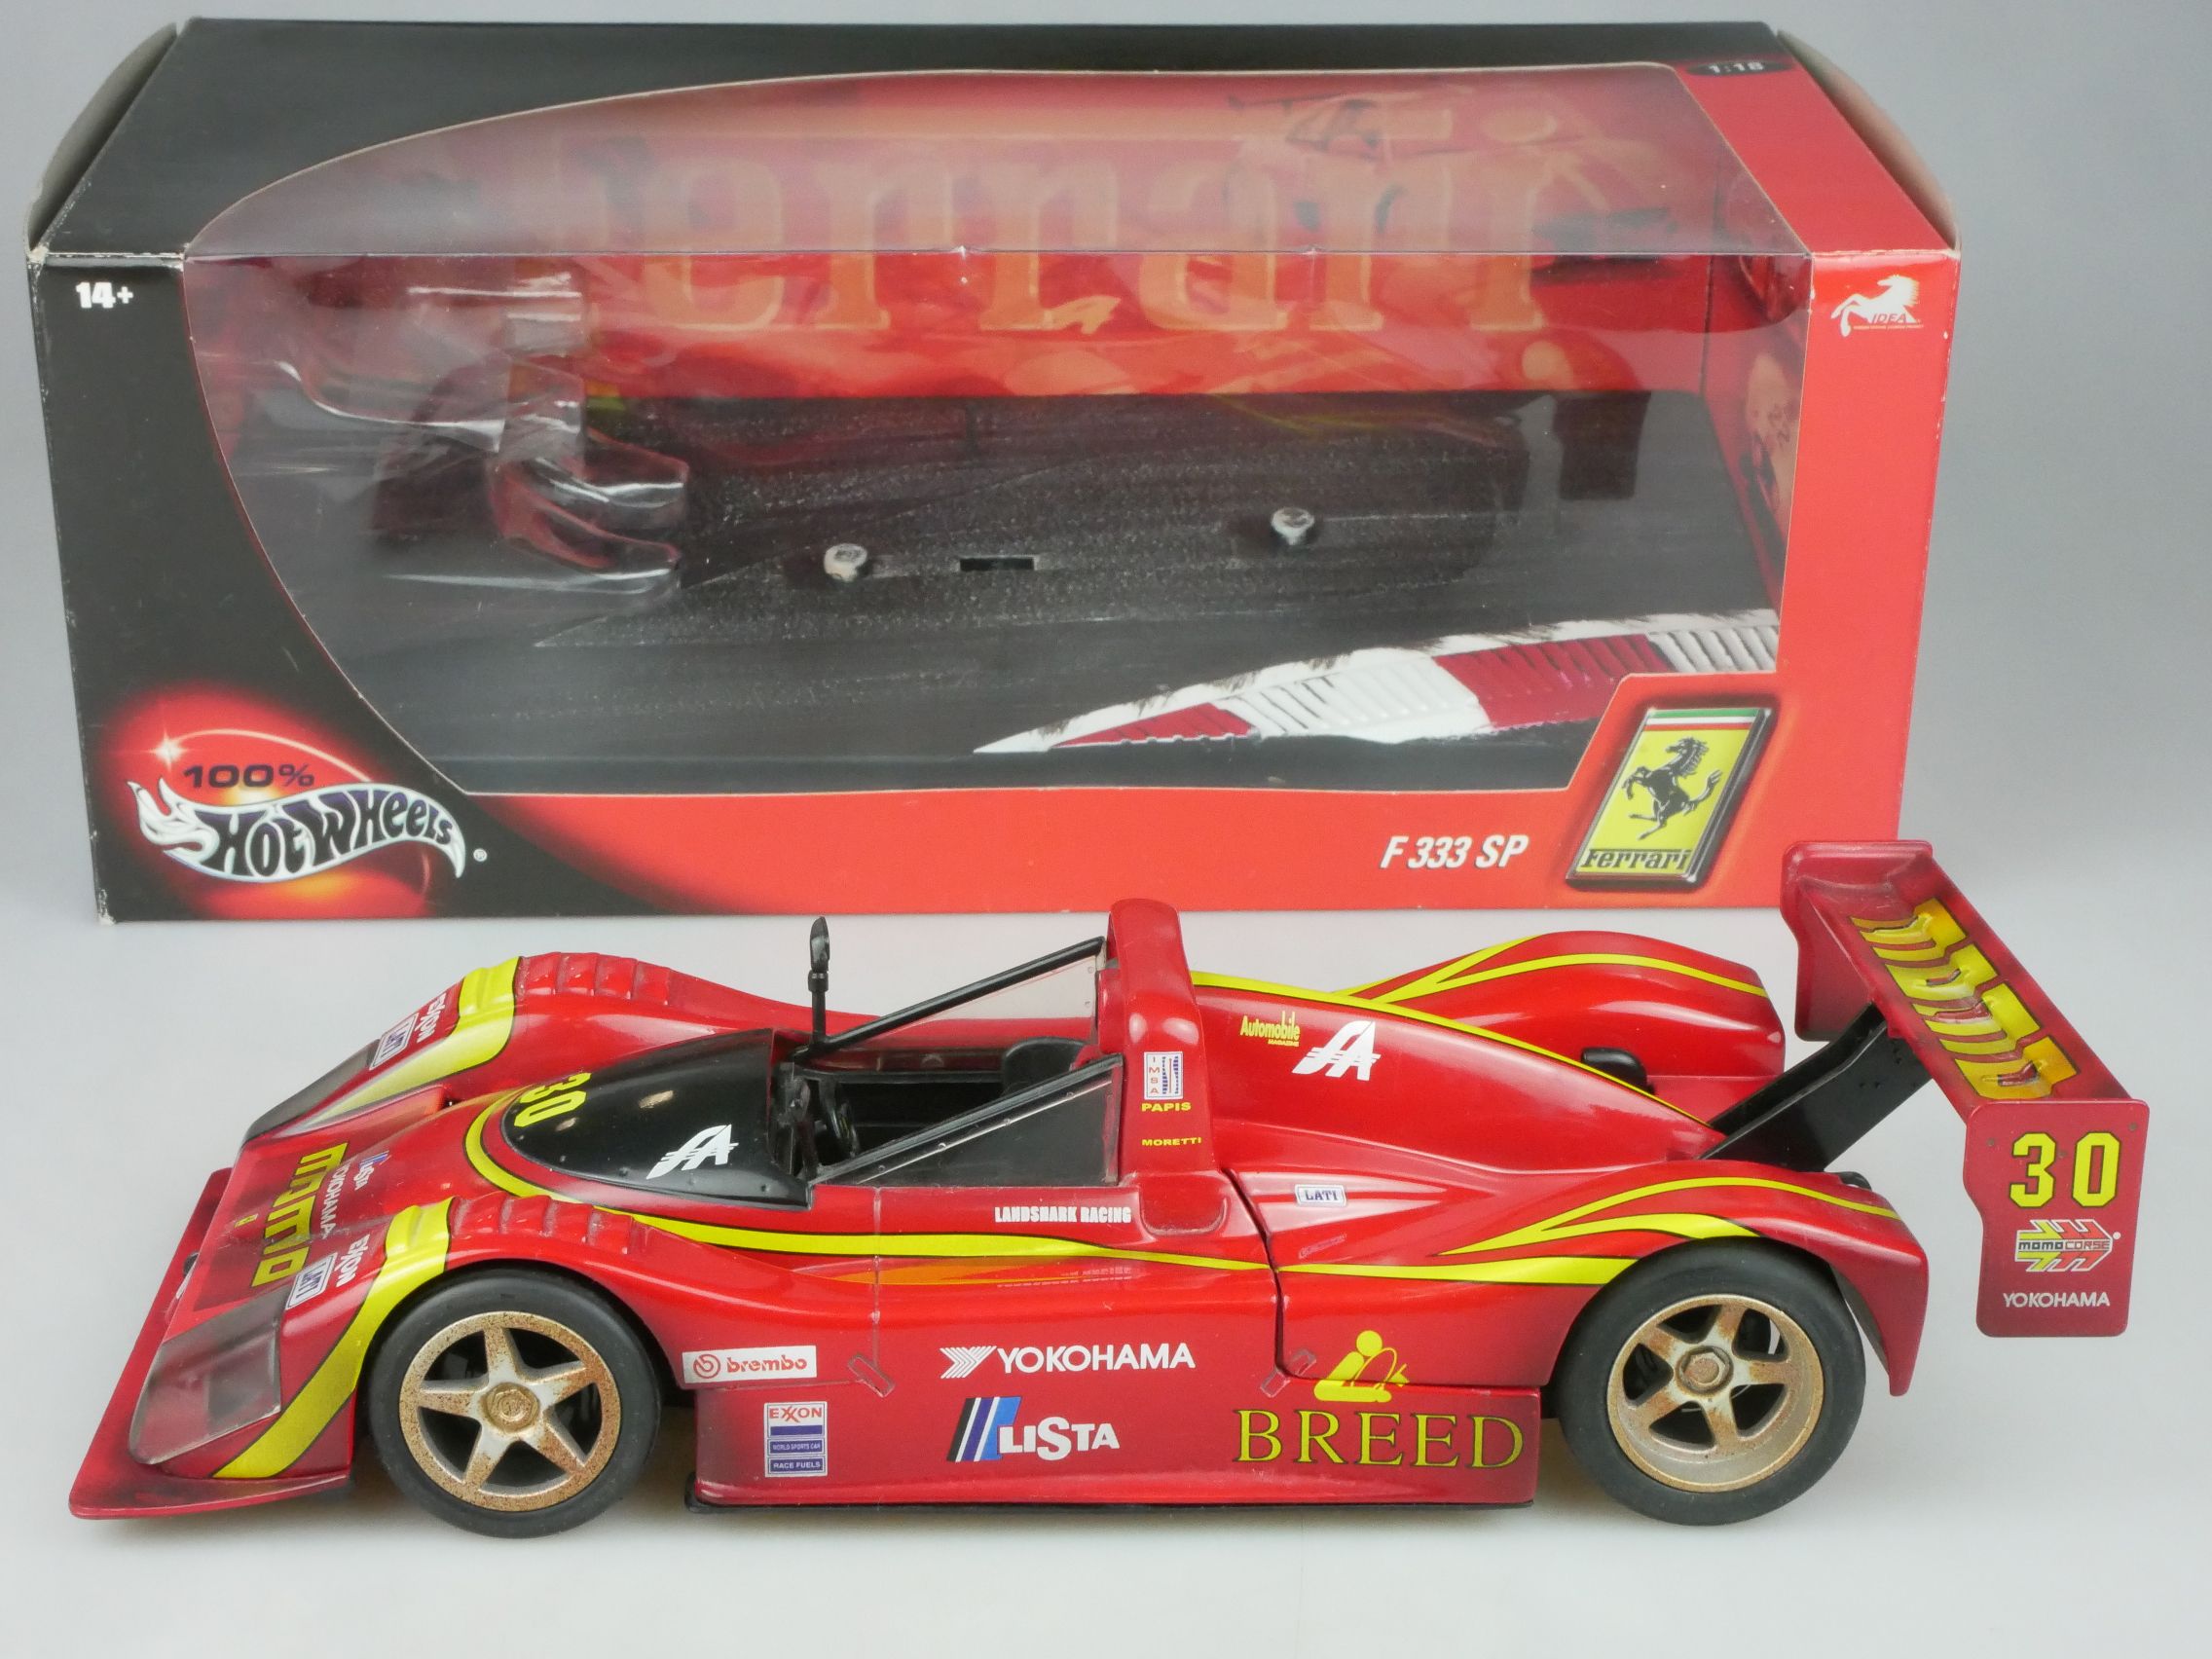 Hot Wheels 1/18 Ferrari F 333 SP # 30 momo dirty as raced 29750 + Box 126372